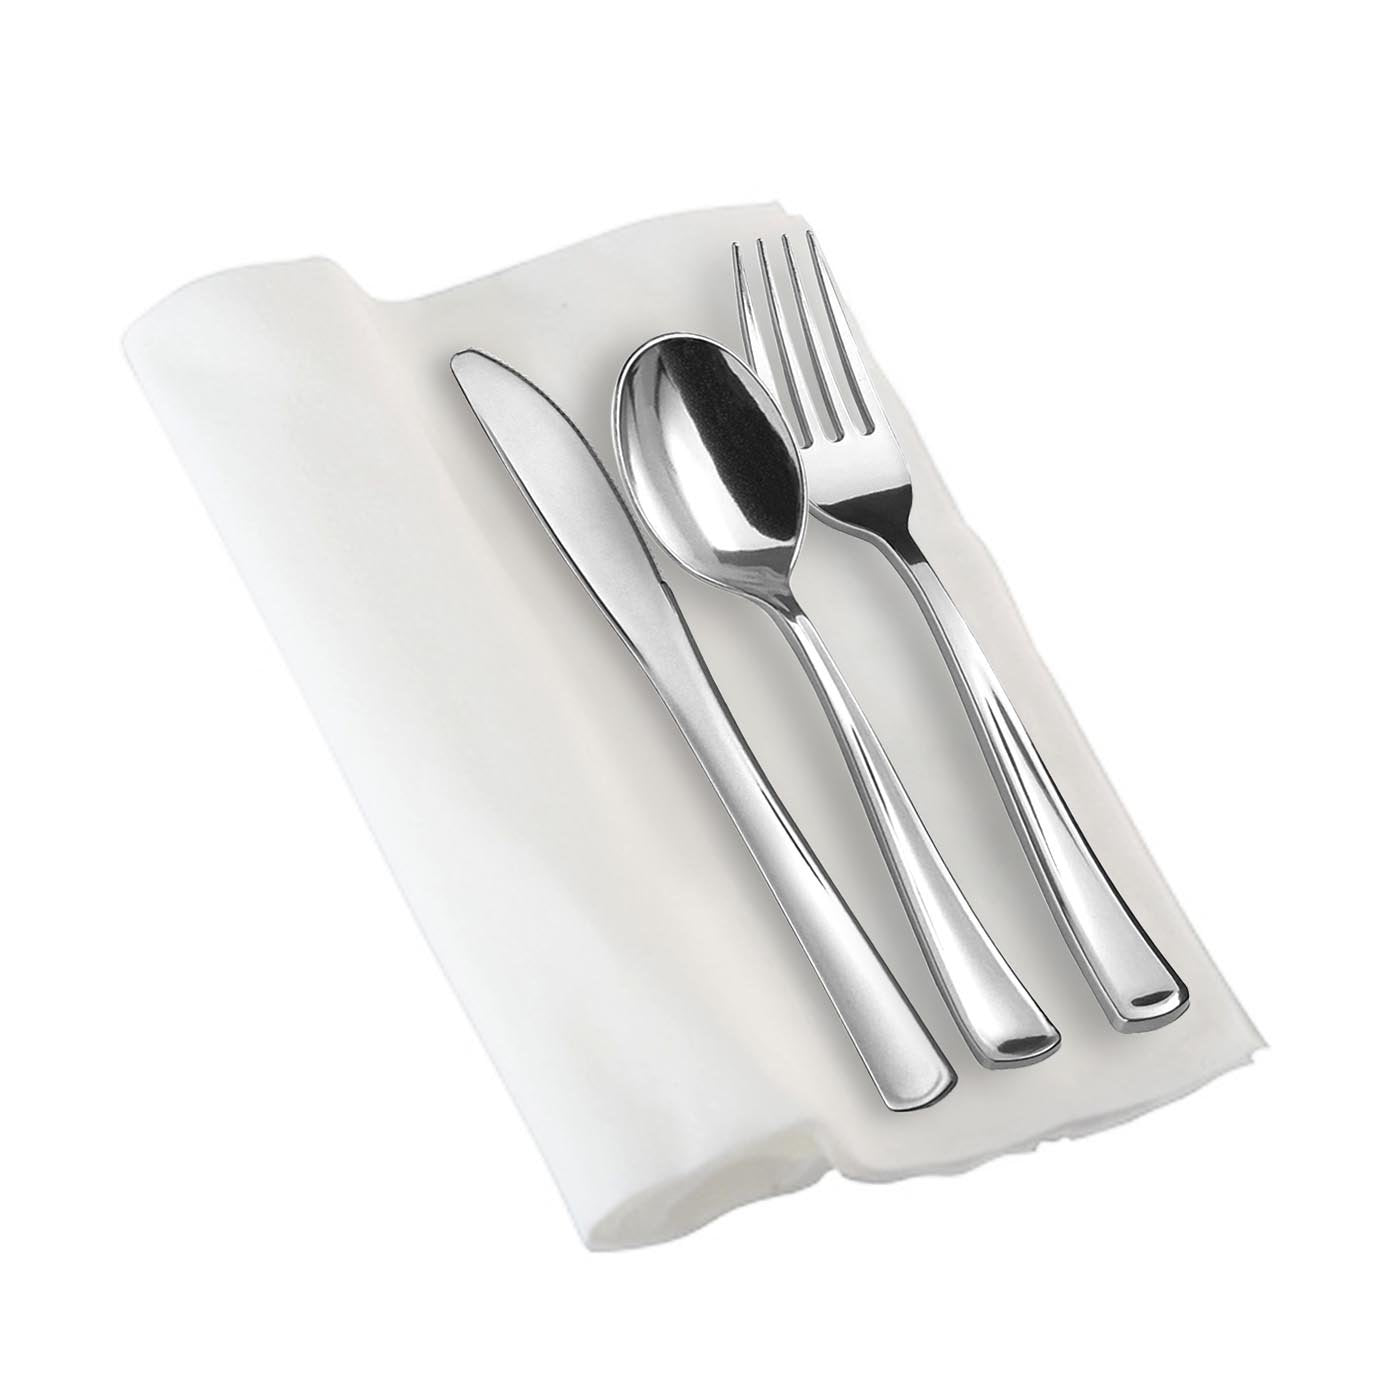 Flatware Set - Cutlery White Napkin Set